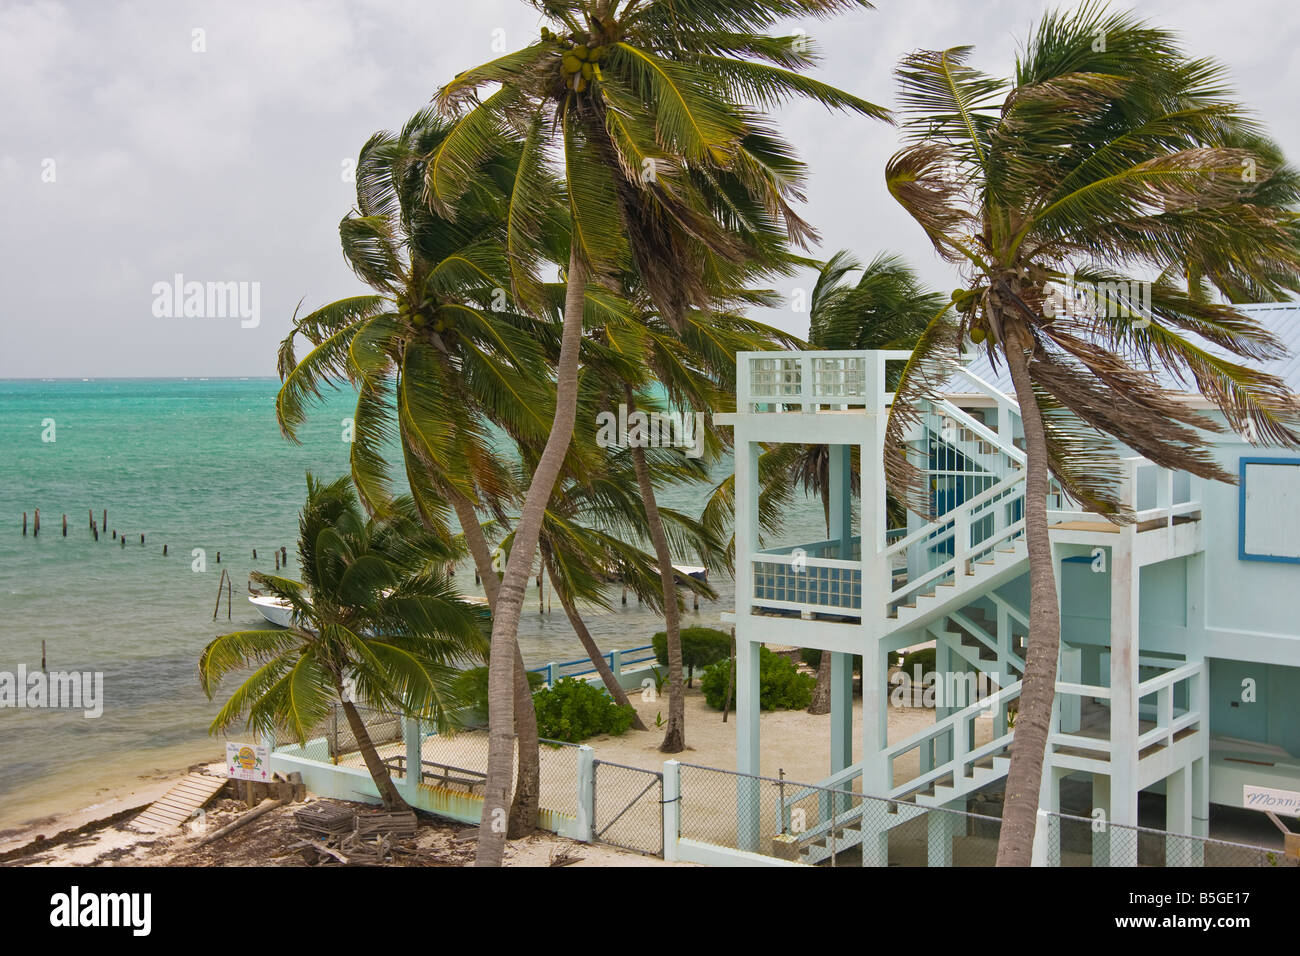 CAYE CAULKER BELIZE Palm tress and hotel on Caribbean beach Stock Photo